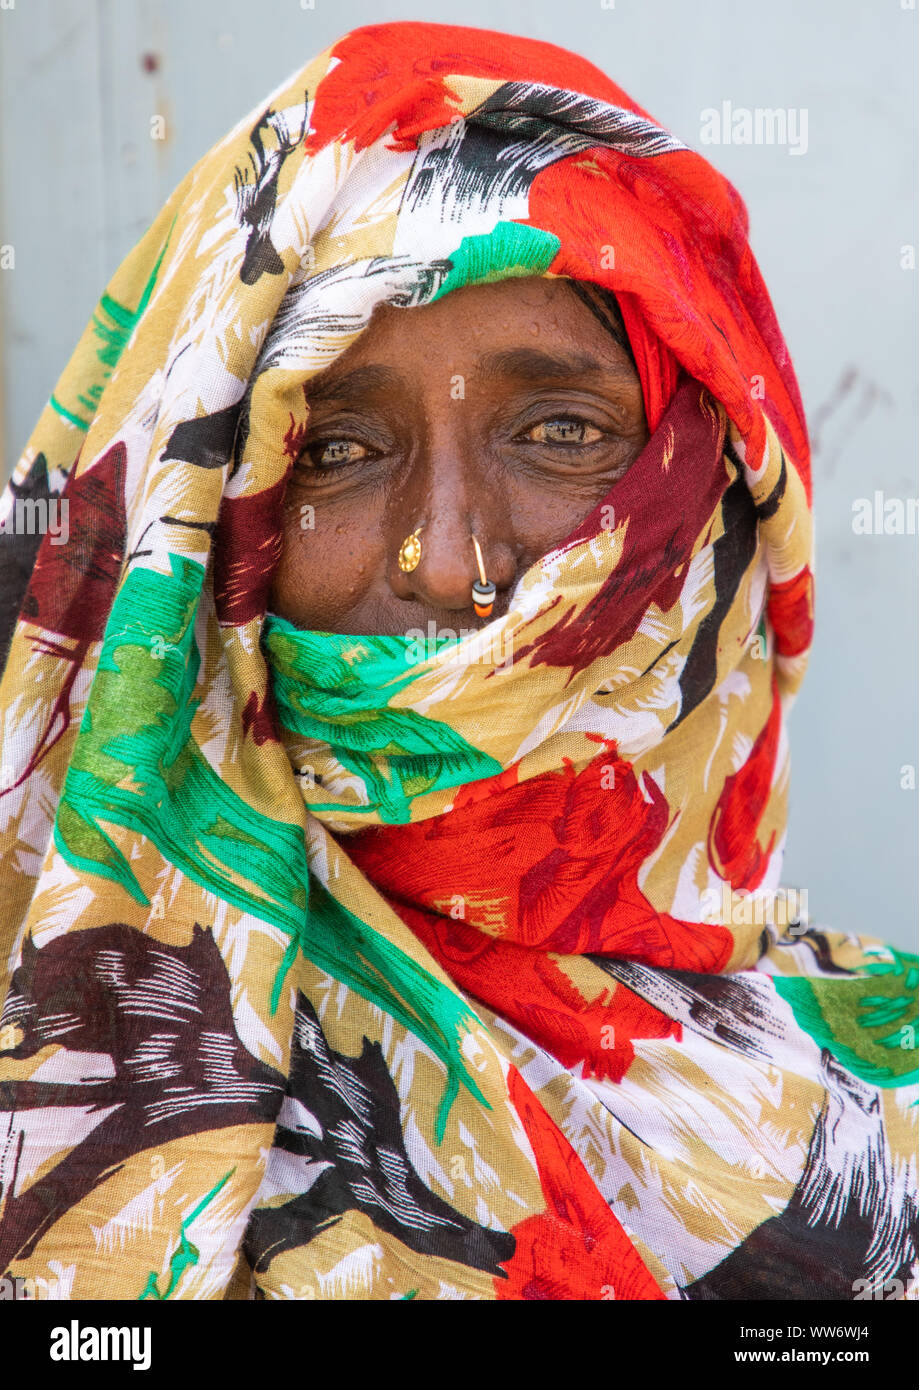 eritrean woman stock photos & eritrean woman stock images